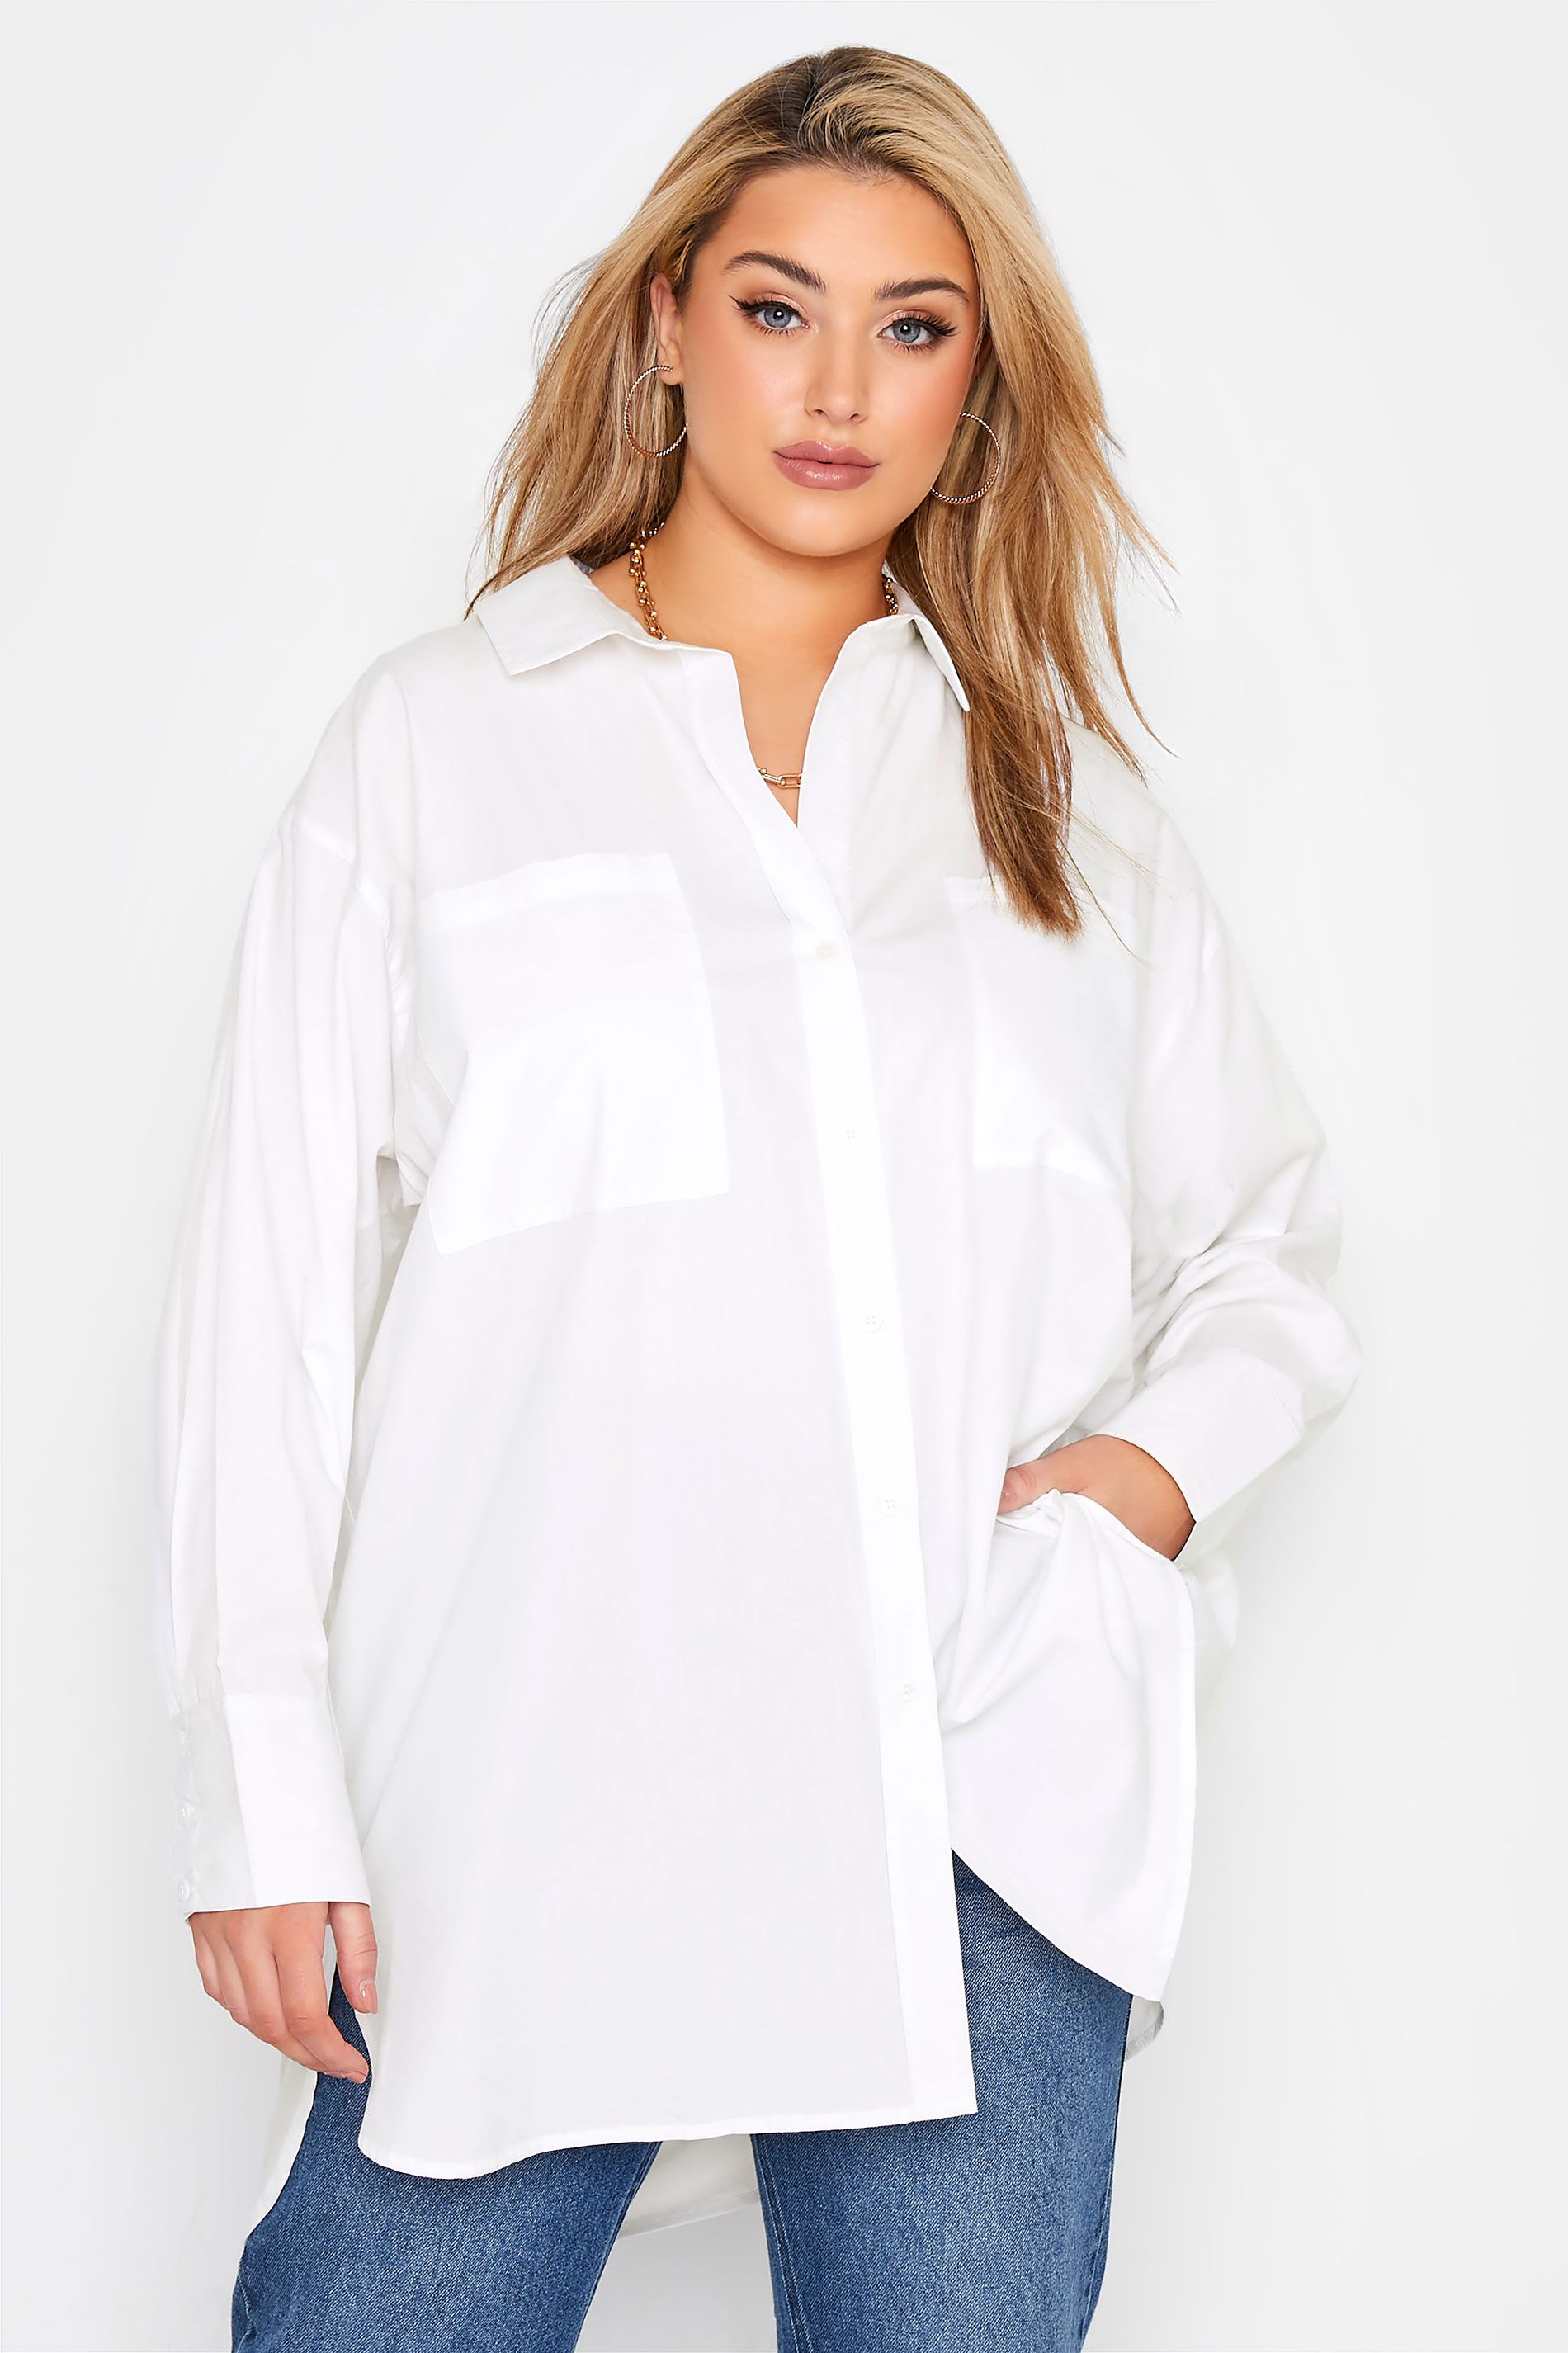 LIMITED COLLECTION Plus Size White Oversized Boyfriend Shirt | Yours Clothing UK